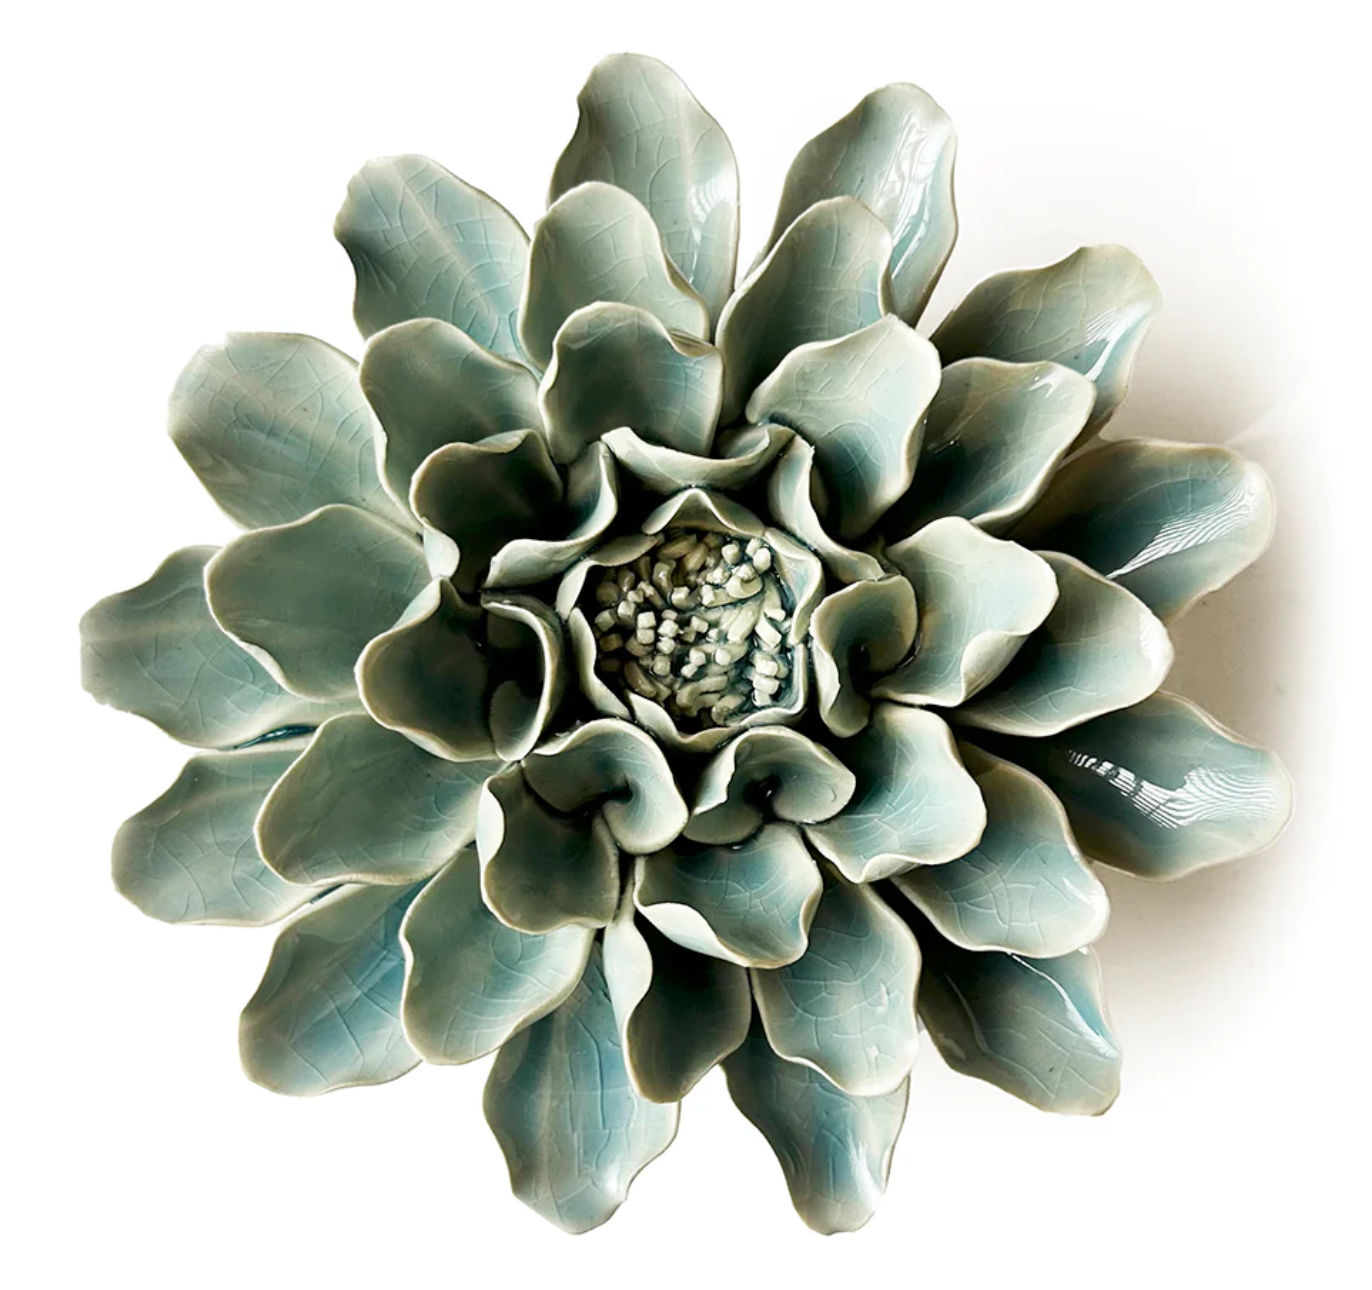 Teal Ceramic Flower